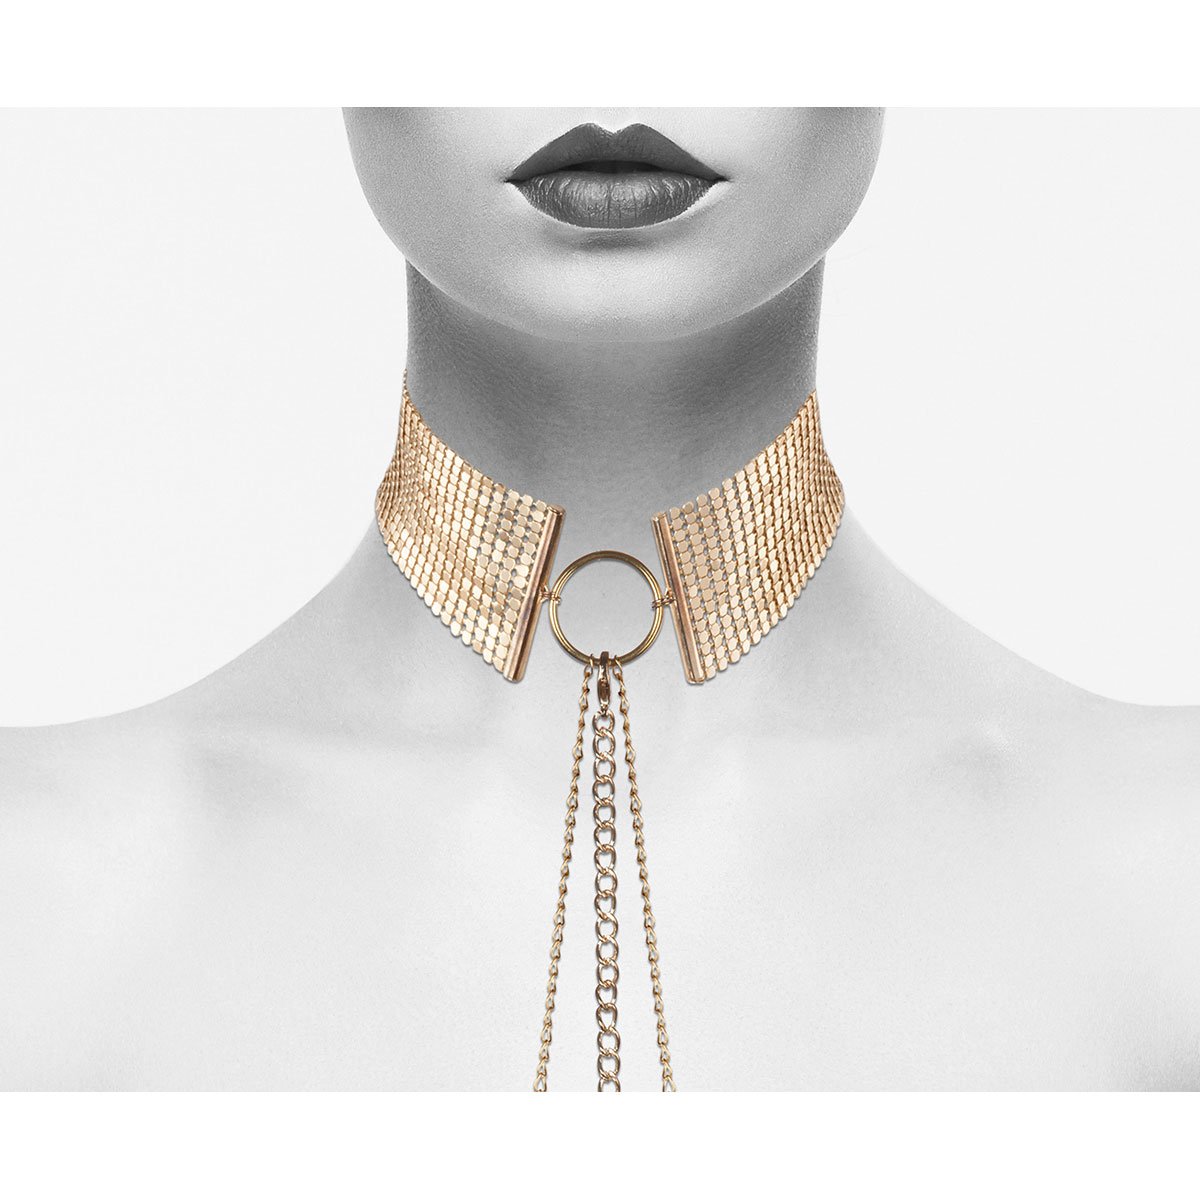 Bijoux Indiscrets Desir Metallique Chain Collar - Buy At Luxury Toy X - Free 3-Day Shipping